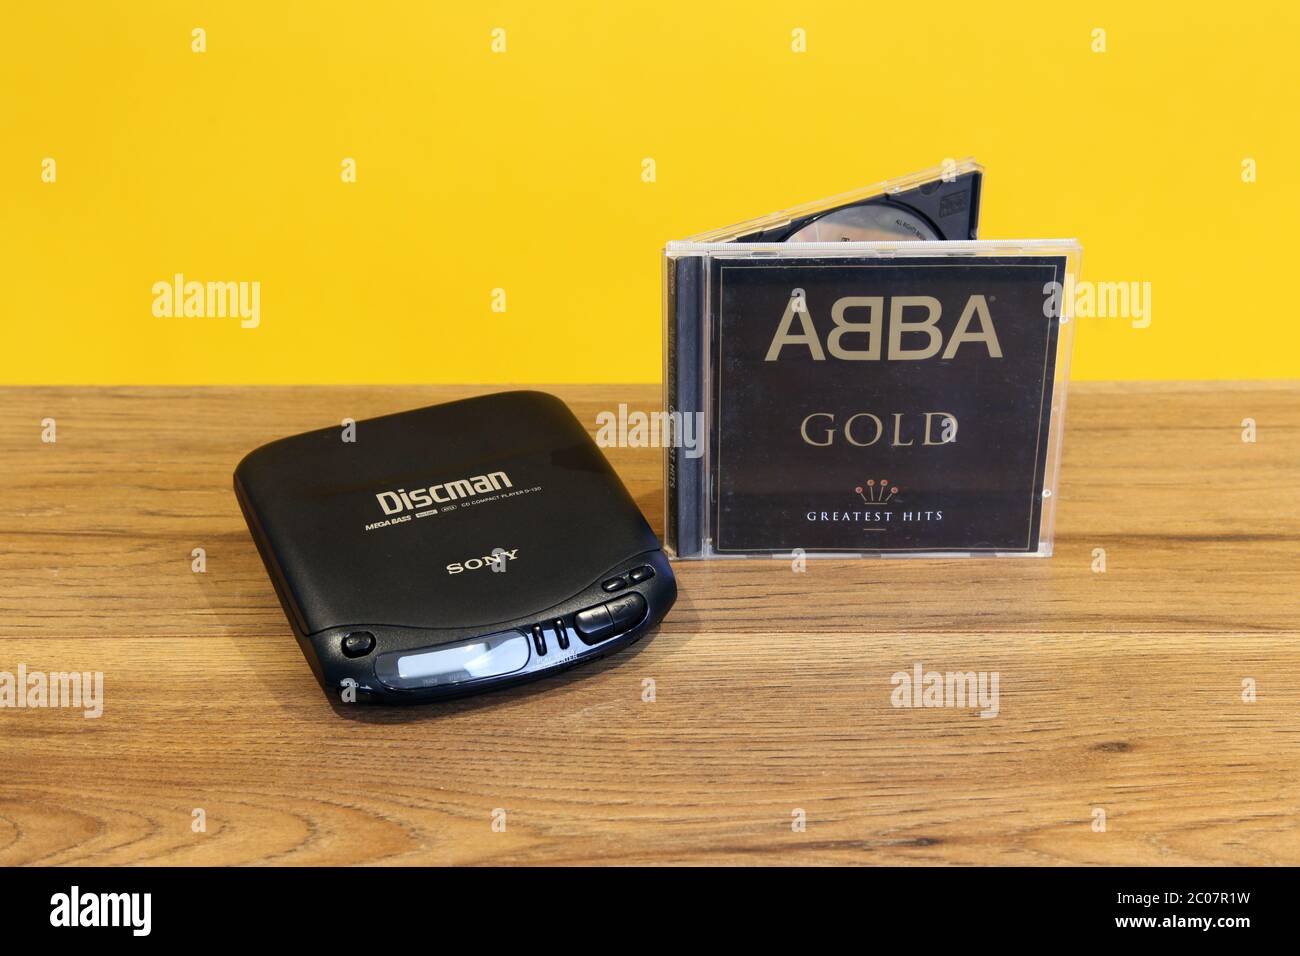 ABBA Gold CD album next to a SONY Discman compact disc player Stock Photo